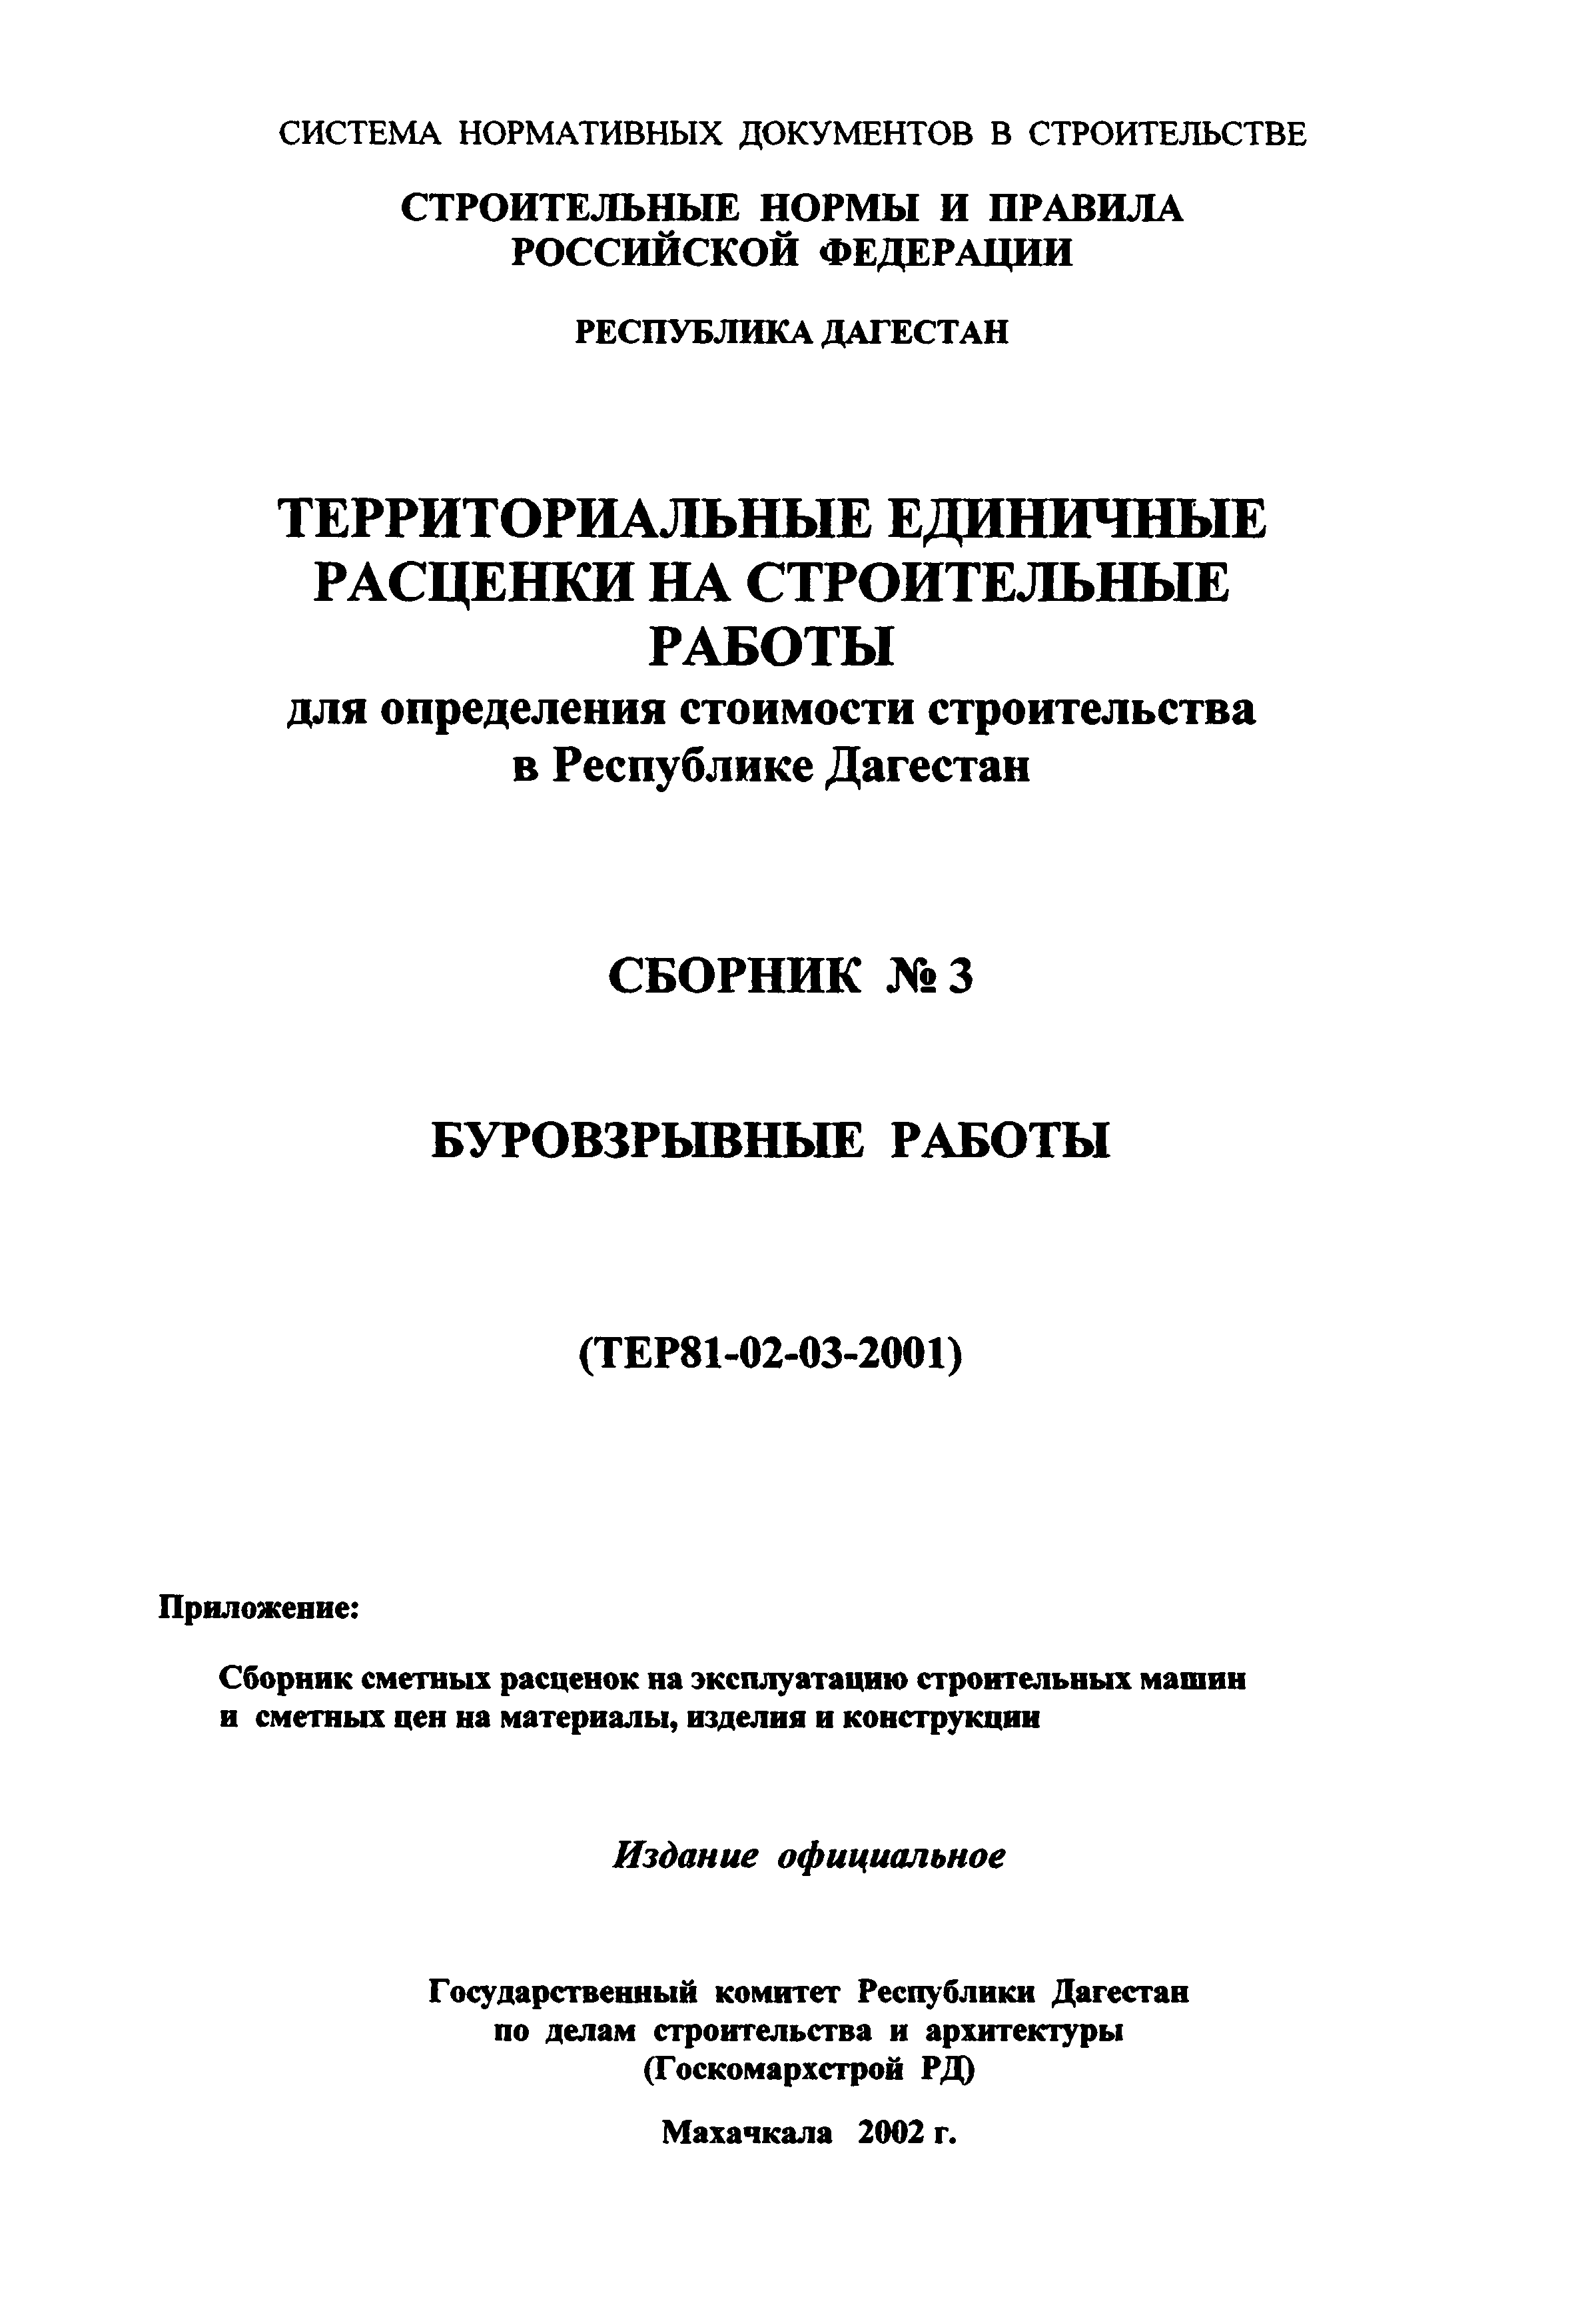 ТЕР Республика Дагестан 2001-03